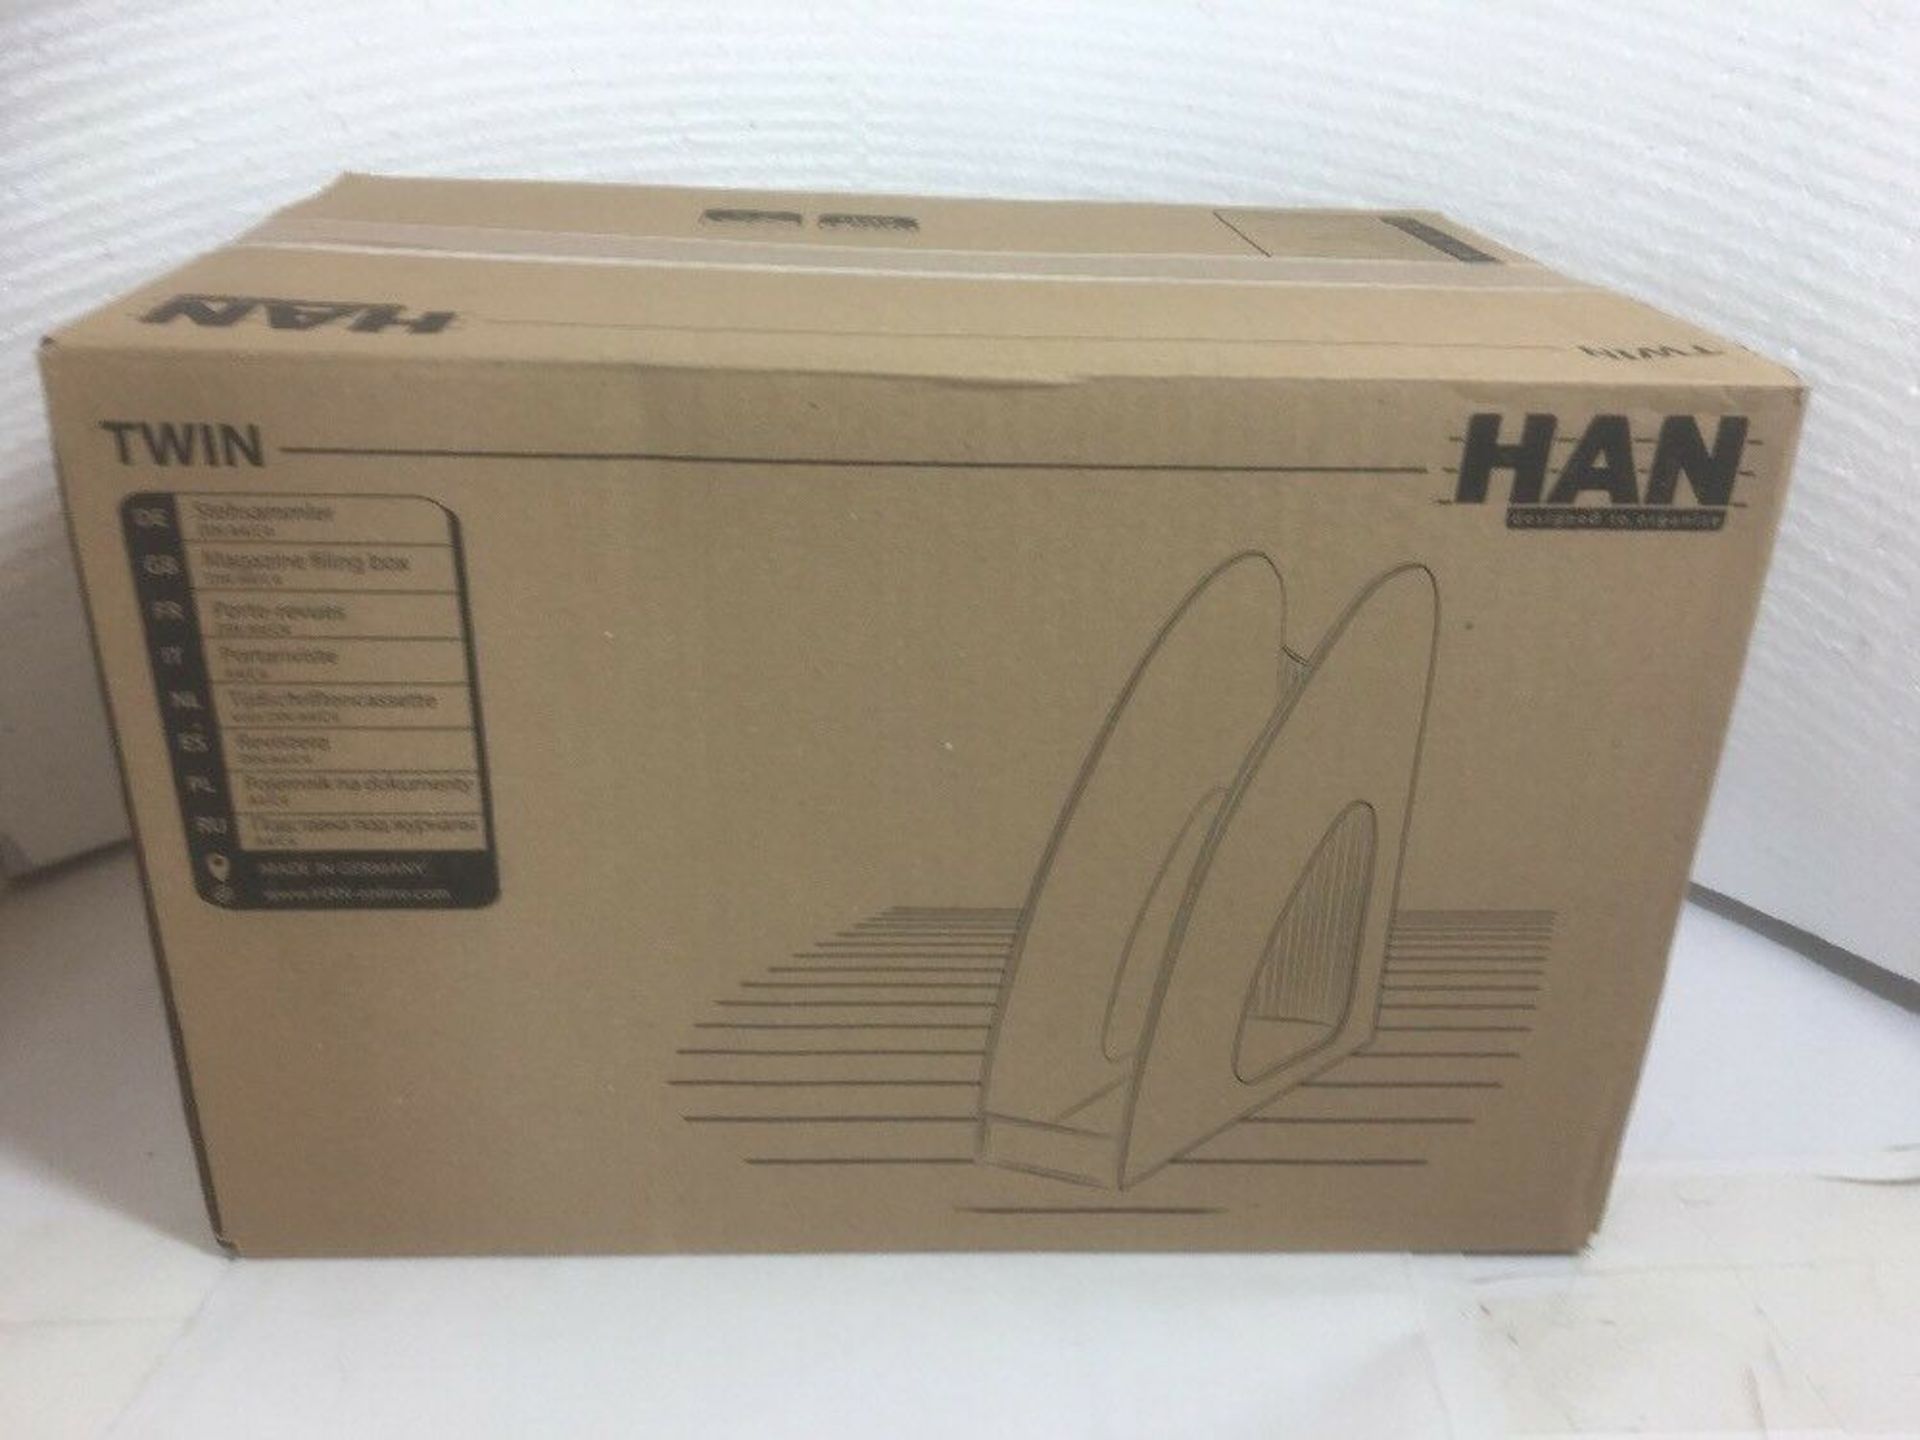 Han Loop Magazine Filing Boxes, Black - Box of 10 Brand New - Image 5 of 8